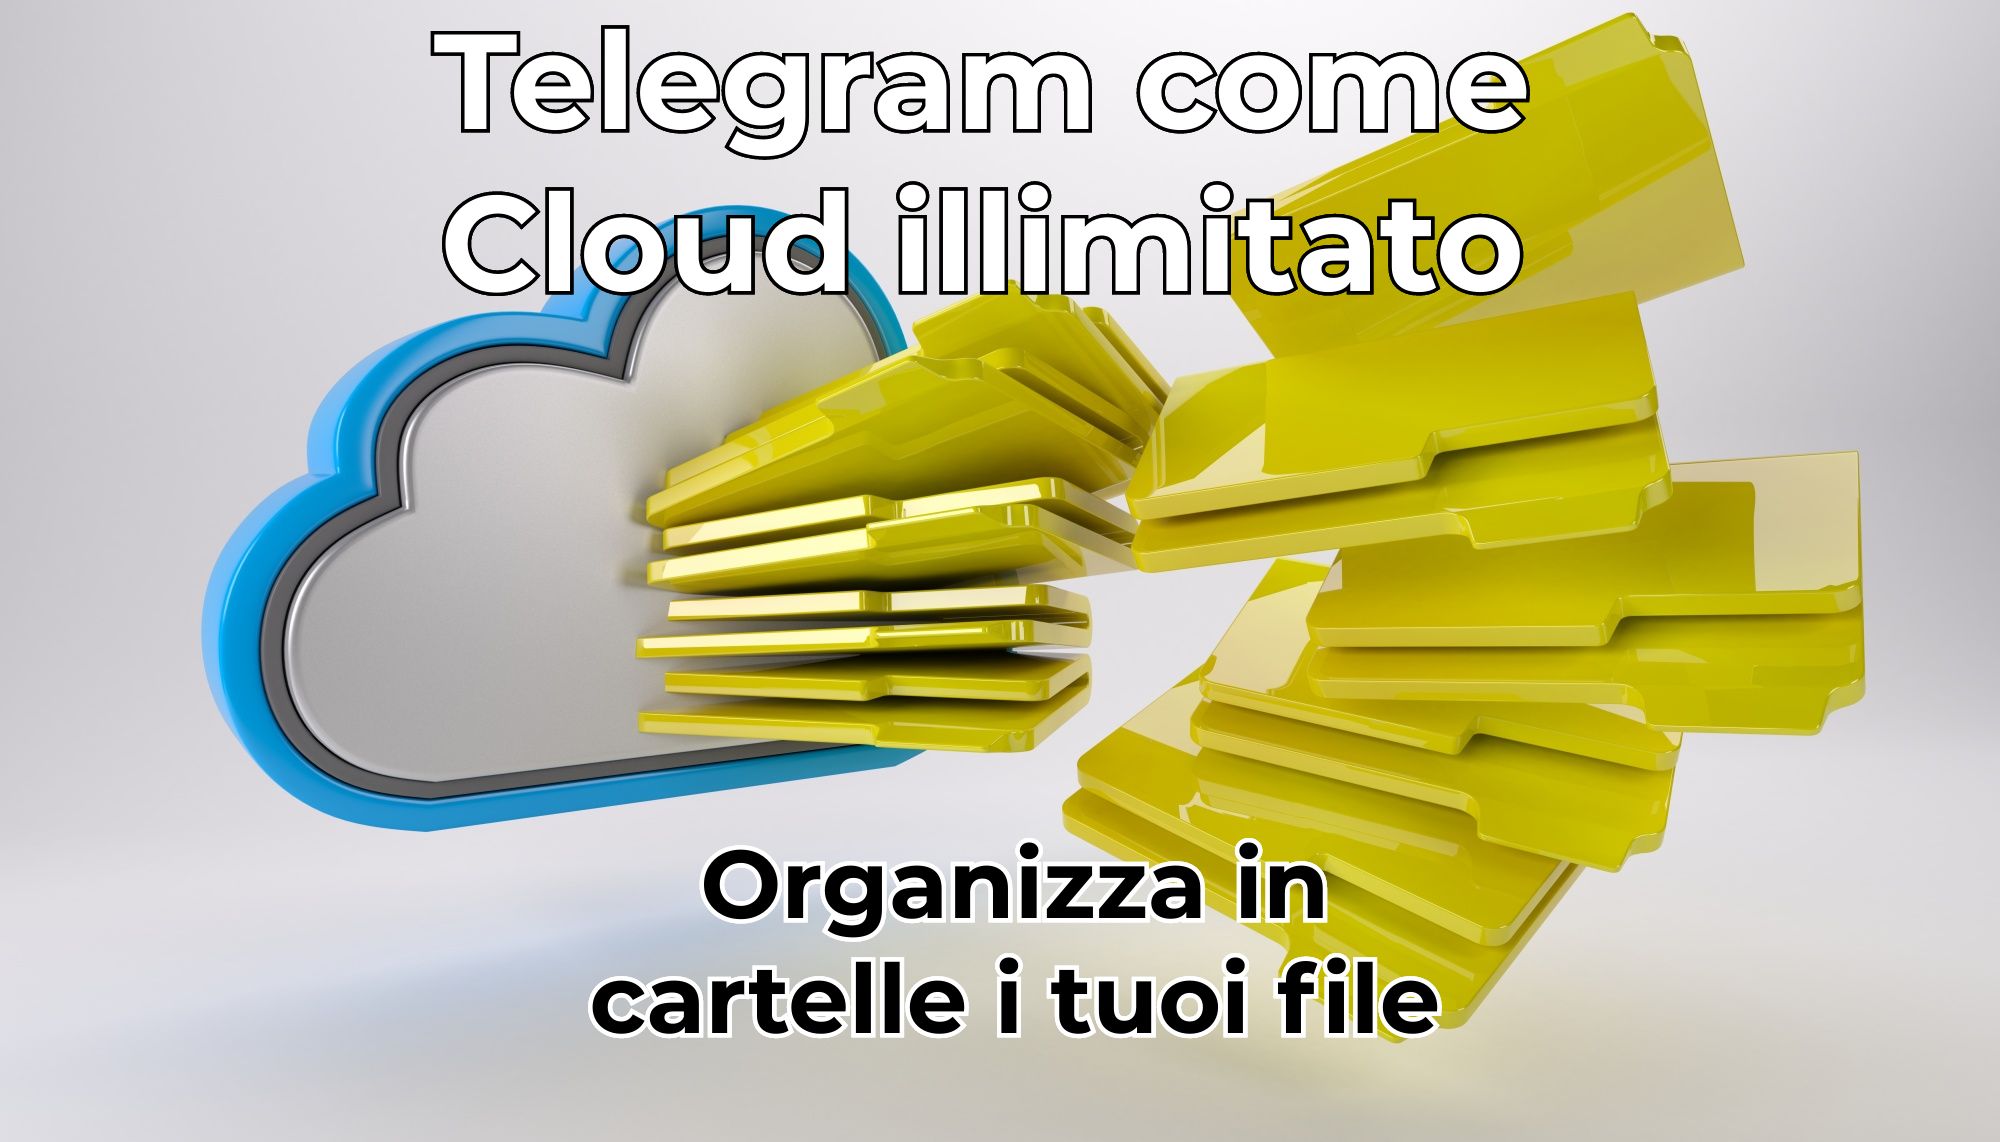 Telegram-organizzi i tuoi file in cartelle